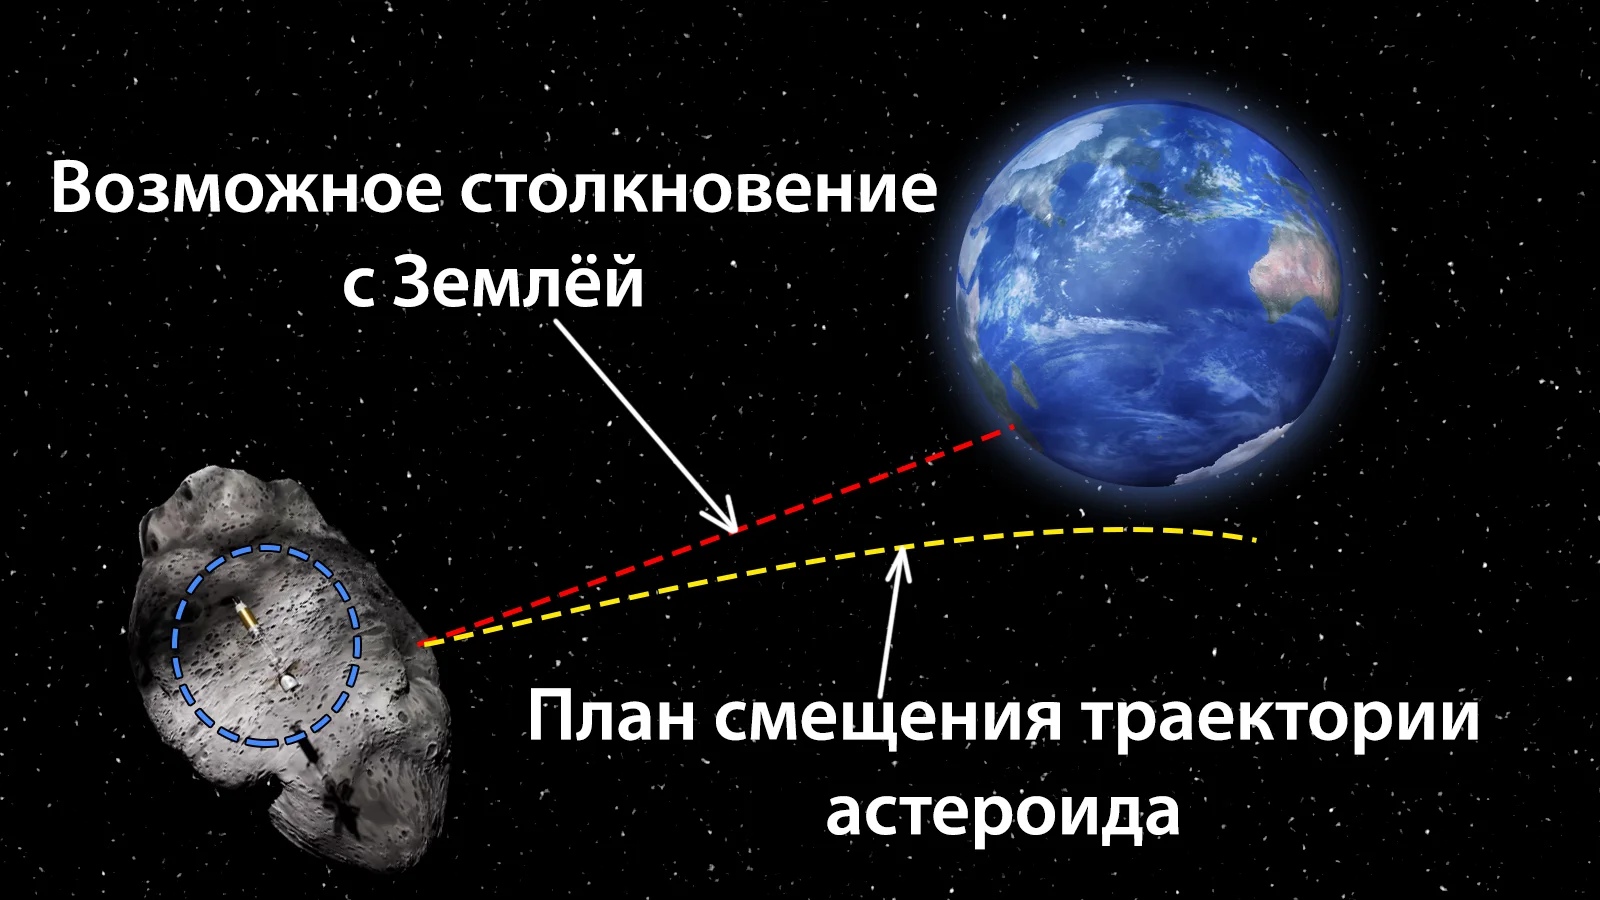 смещение траектории астероида